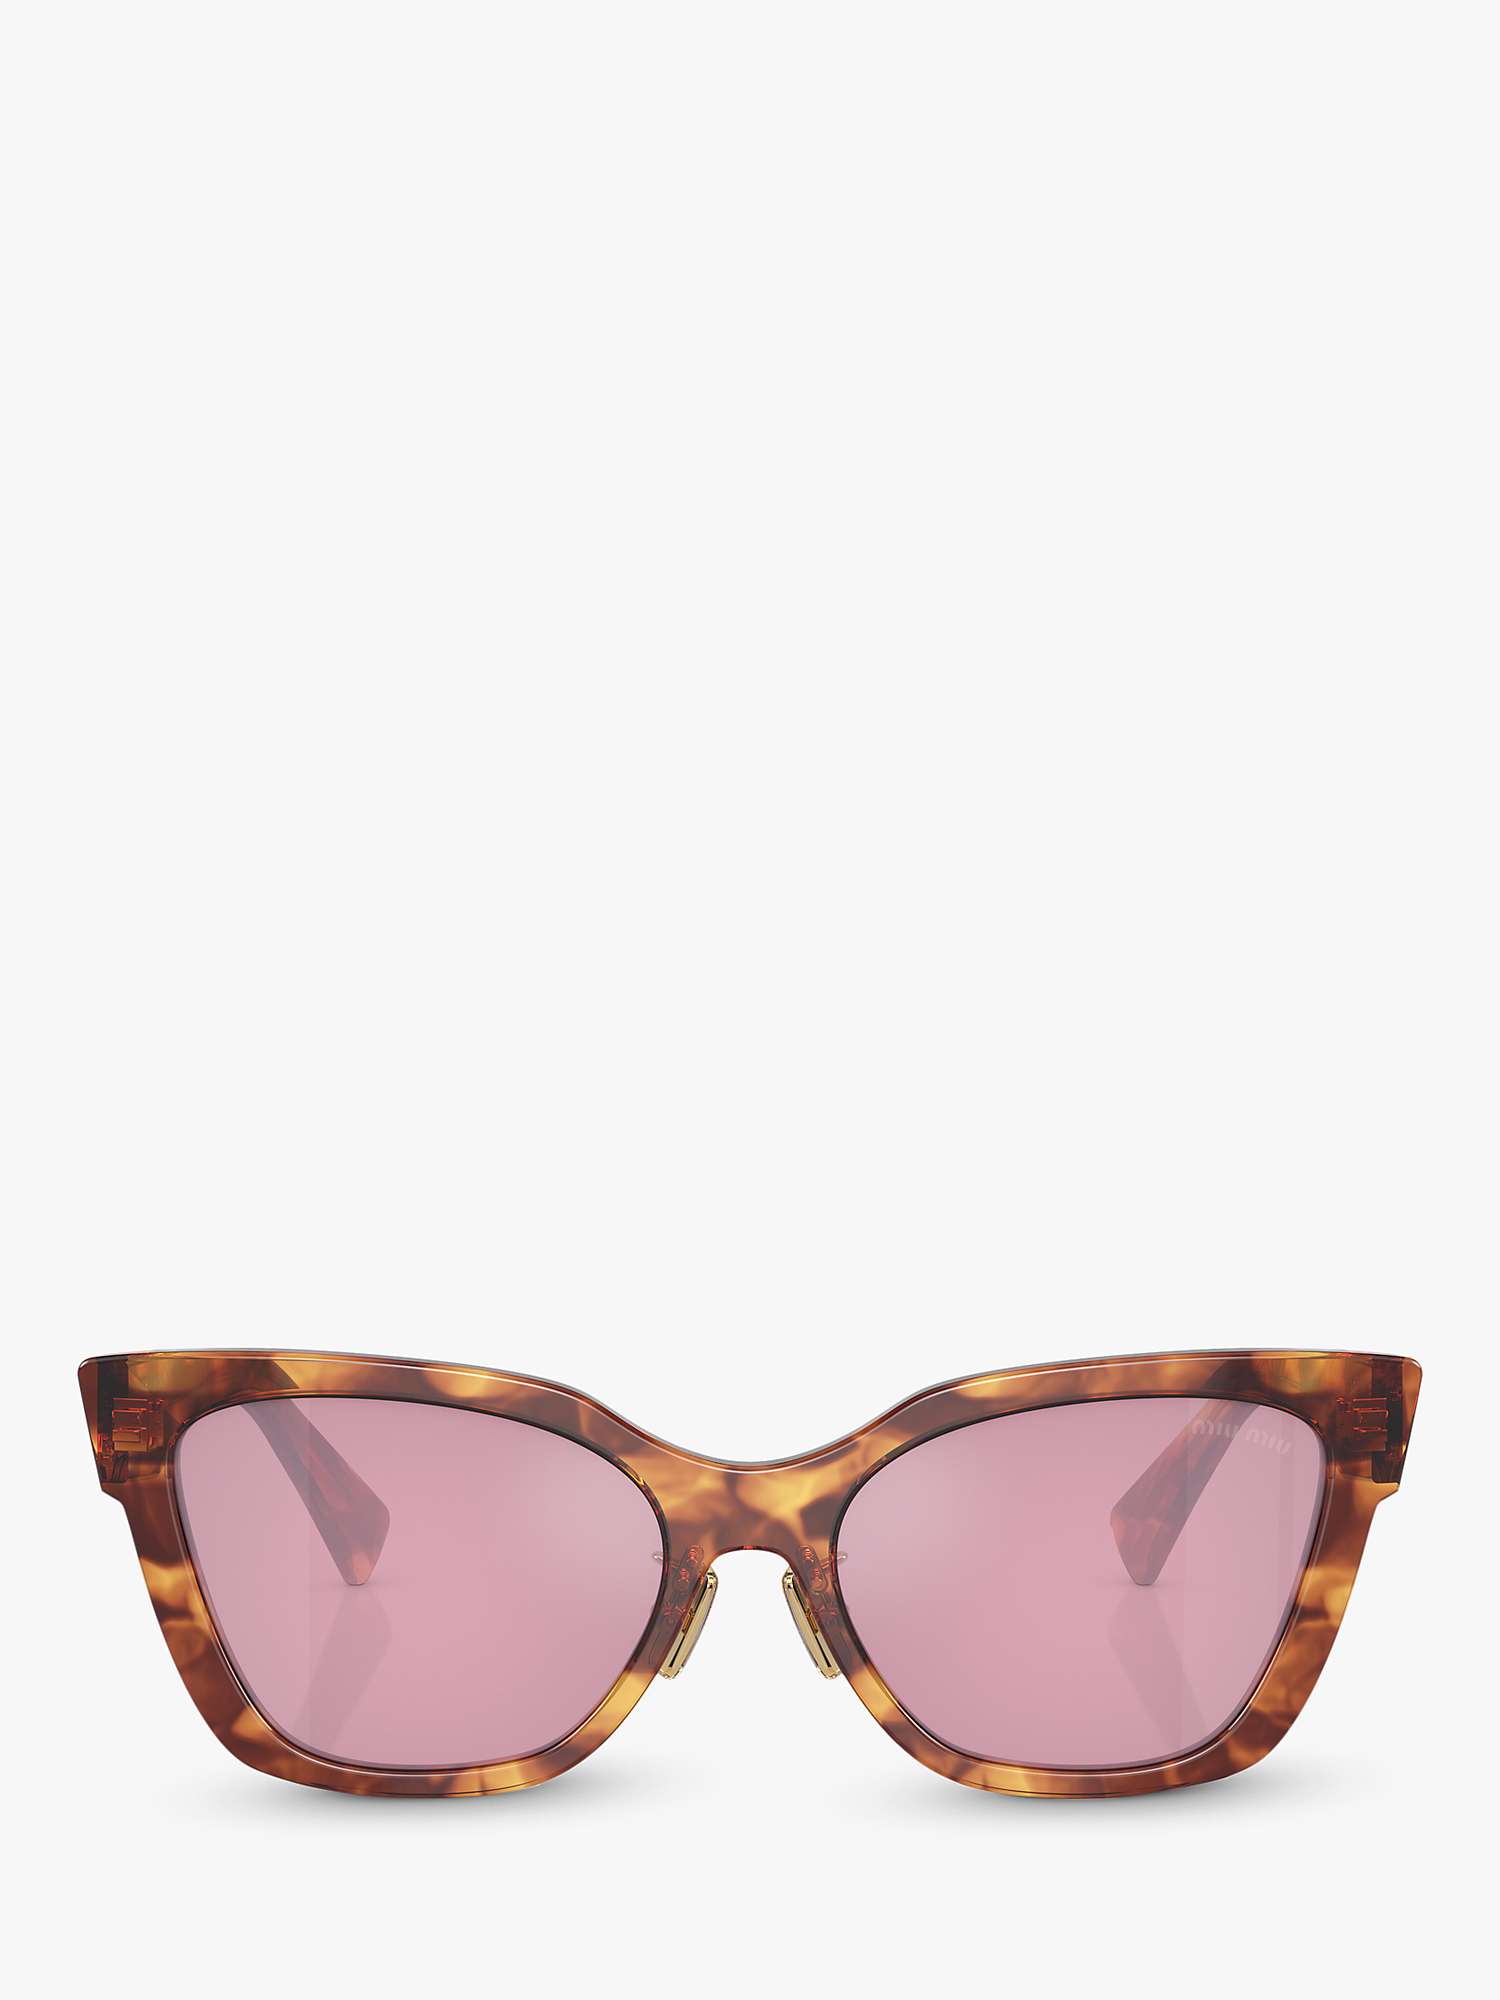 Buy Miu Miu MU 02ZS Women's Cat's Eye Sunglasses, Striped Tobacco/Pink Online at johnlewis.com